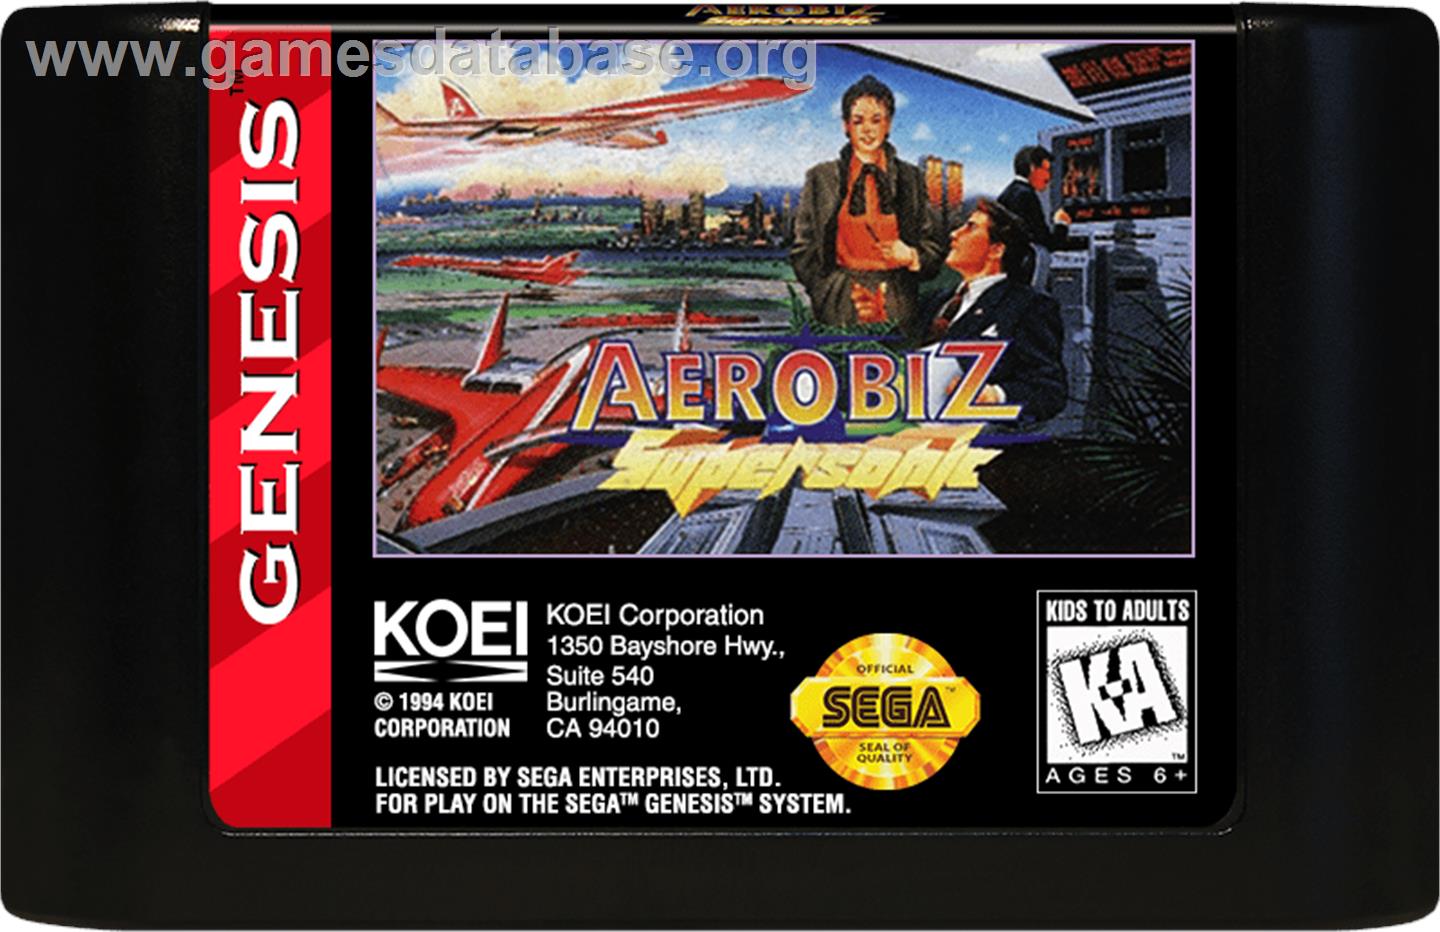 Aerobiz Supersonic - Sega Genesis - Artwork - Cartridge